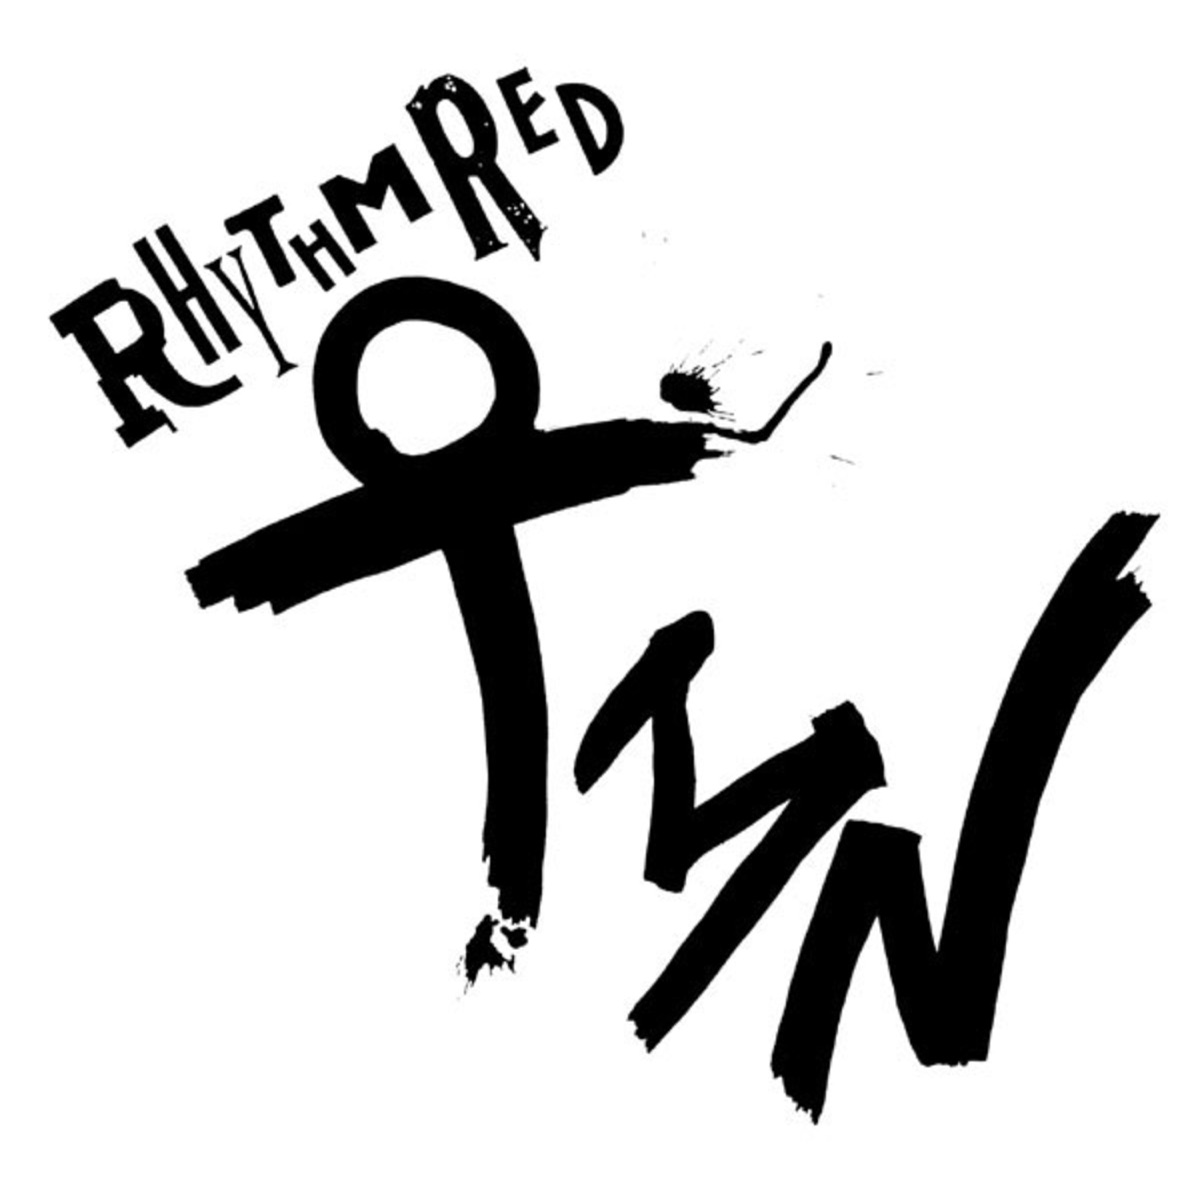 WORLD’S　END　I・II　Rhythm　Red　Live DVD